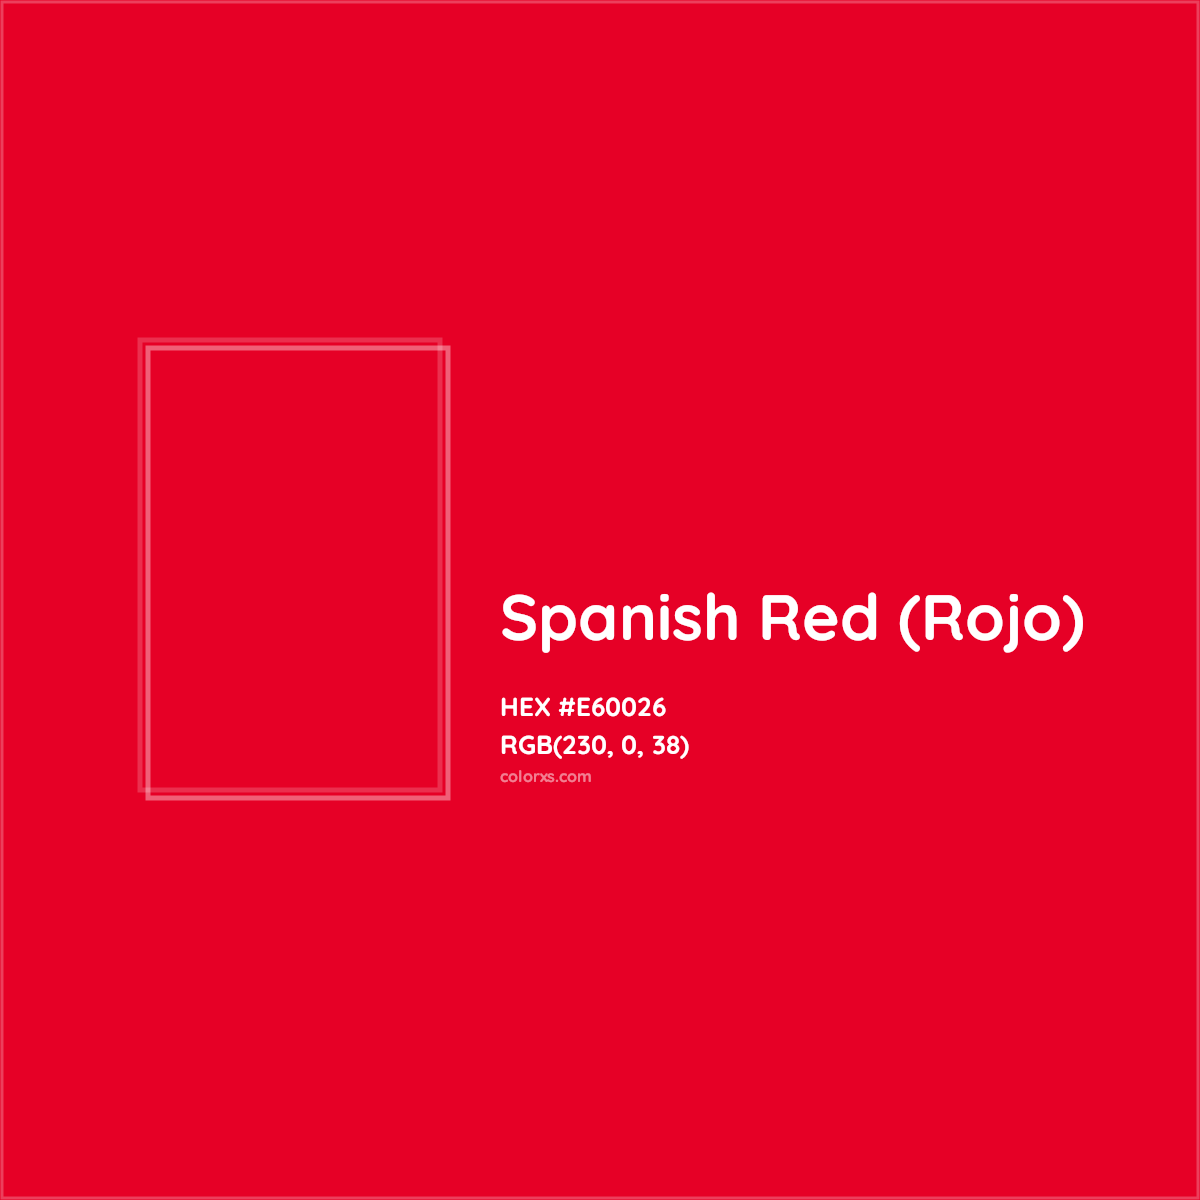 Listón Rojo (Red Ribbon - Spanish Version)